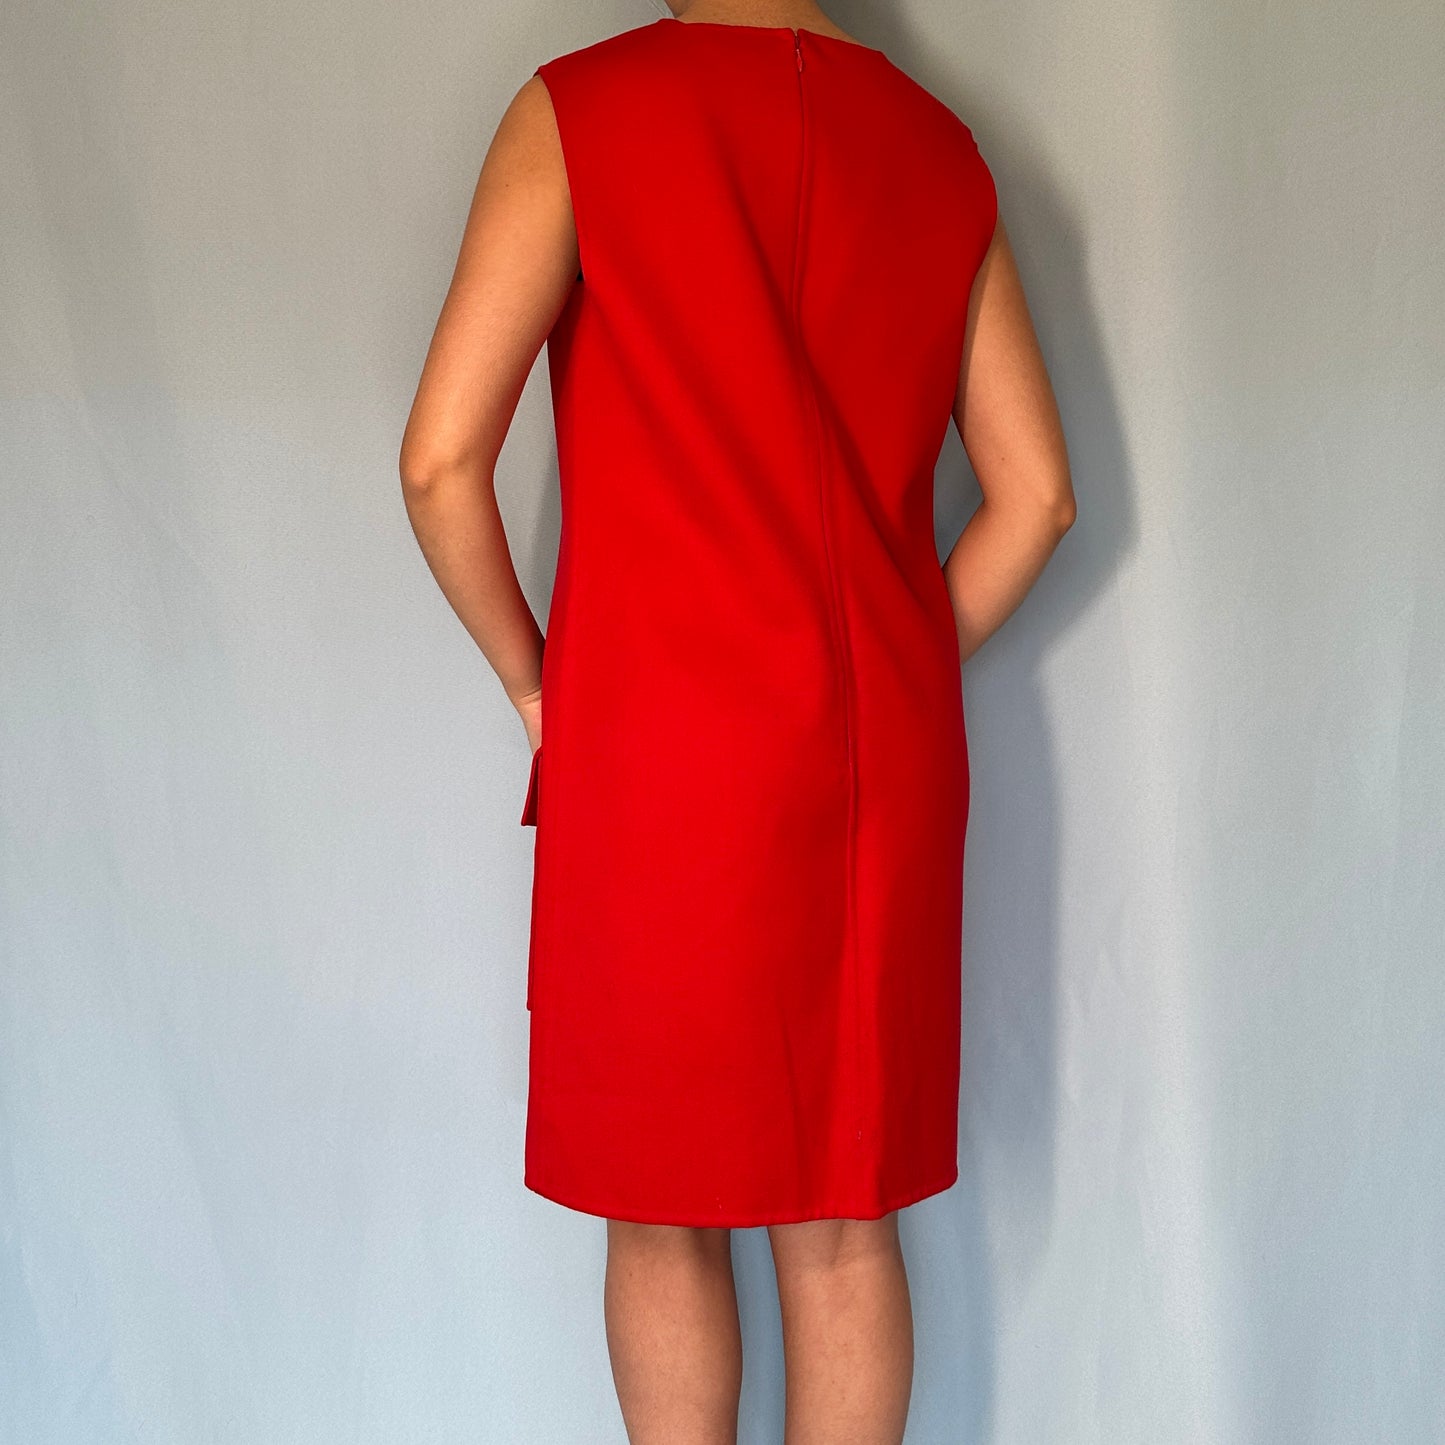 Versace S/S 1996 Runway Red Tunic Pocket Dress